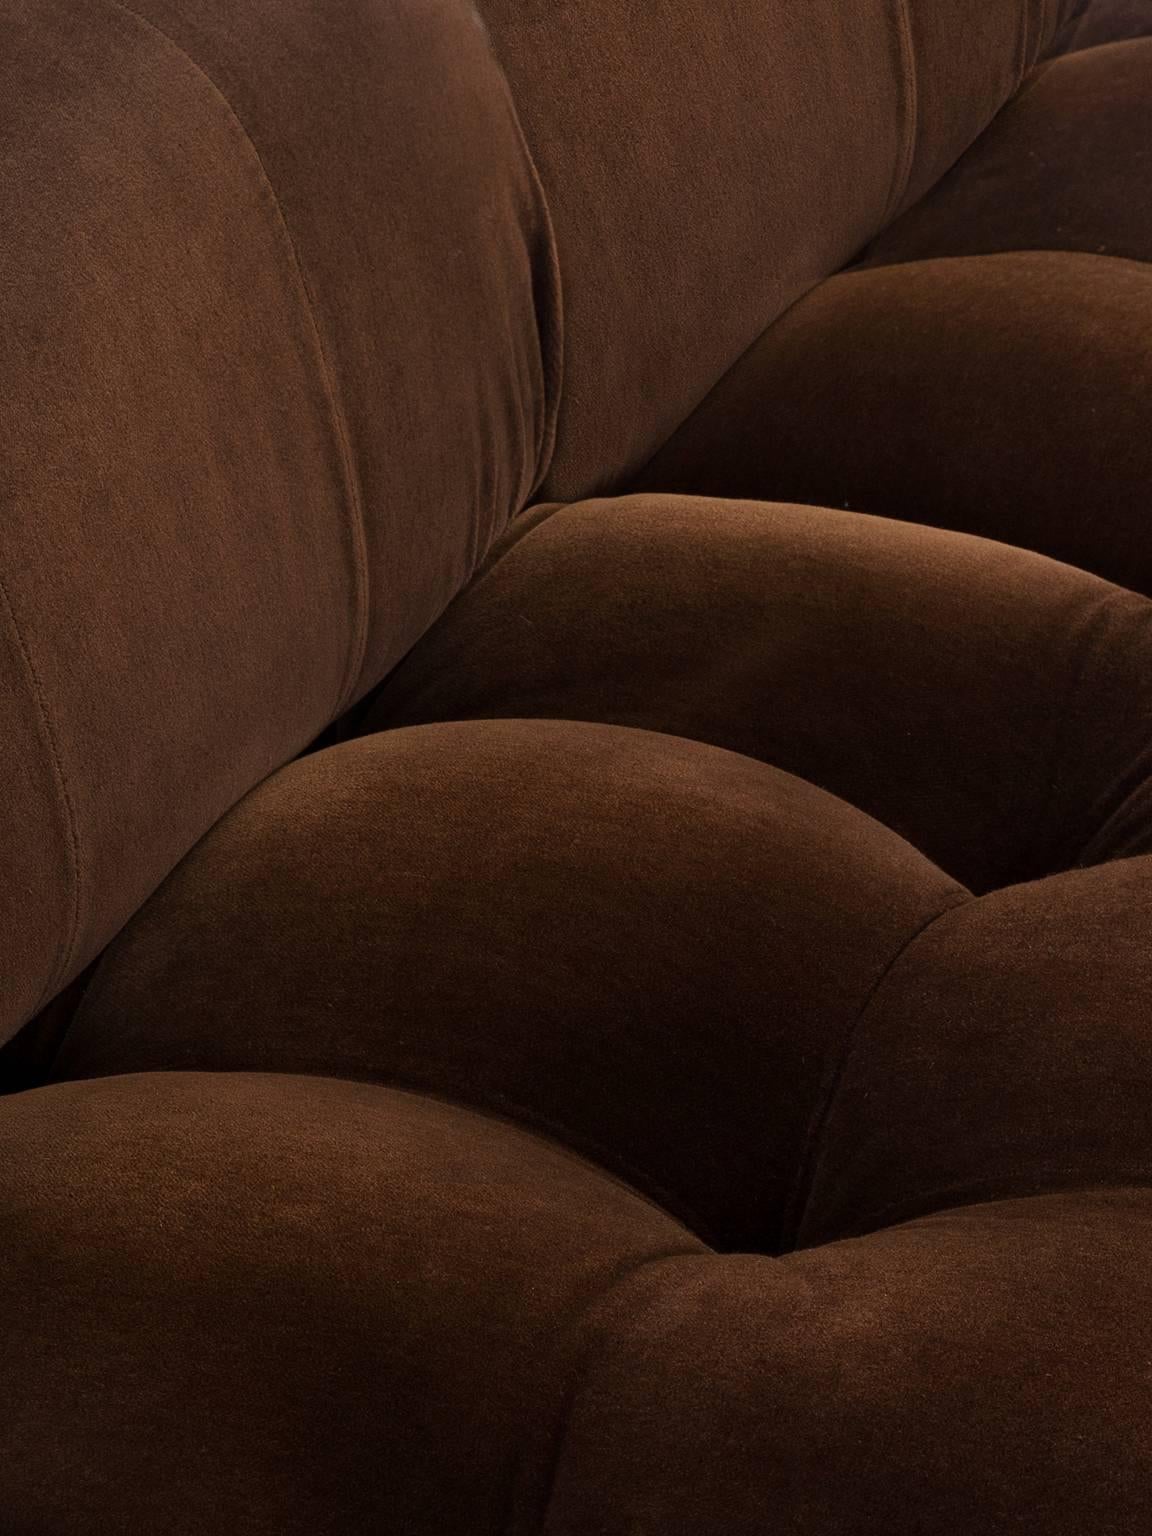 Fabric Mario Bellini 'Camaleonda' Modular Sofa in Original Brown Upholstery